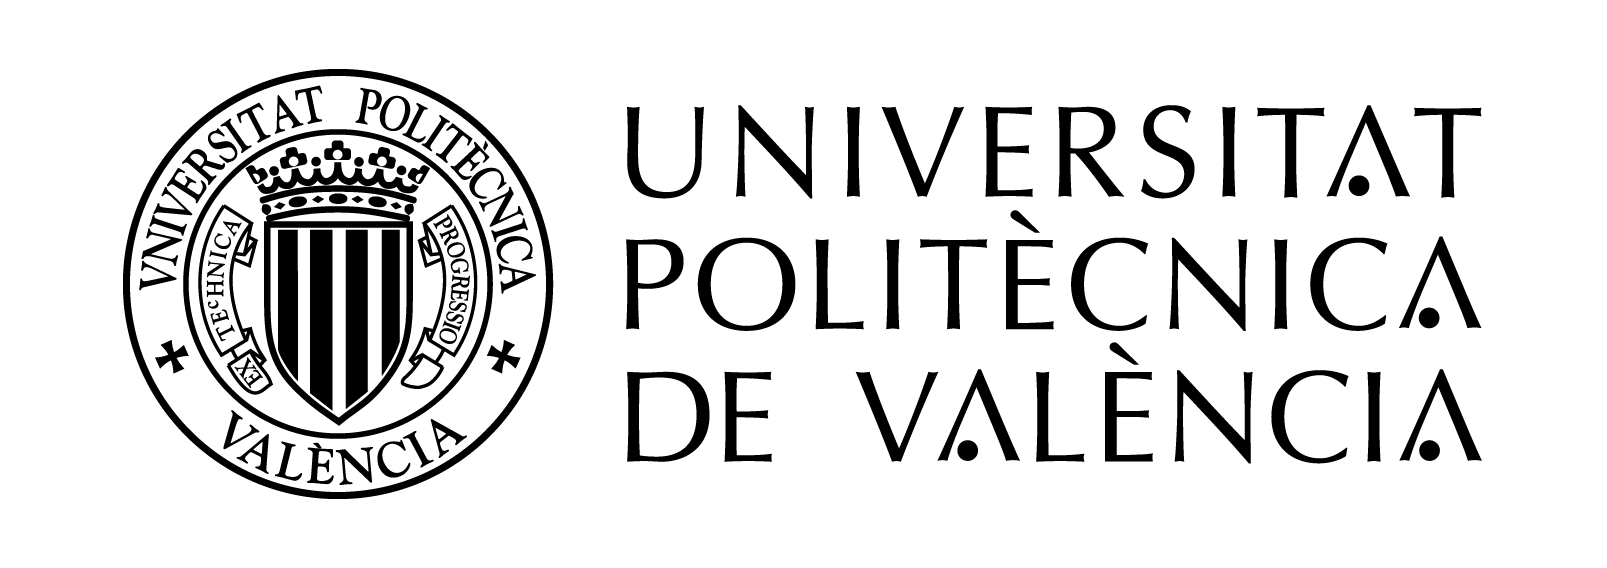 universitat politecnica de valencia